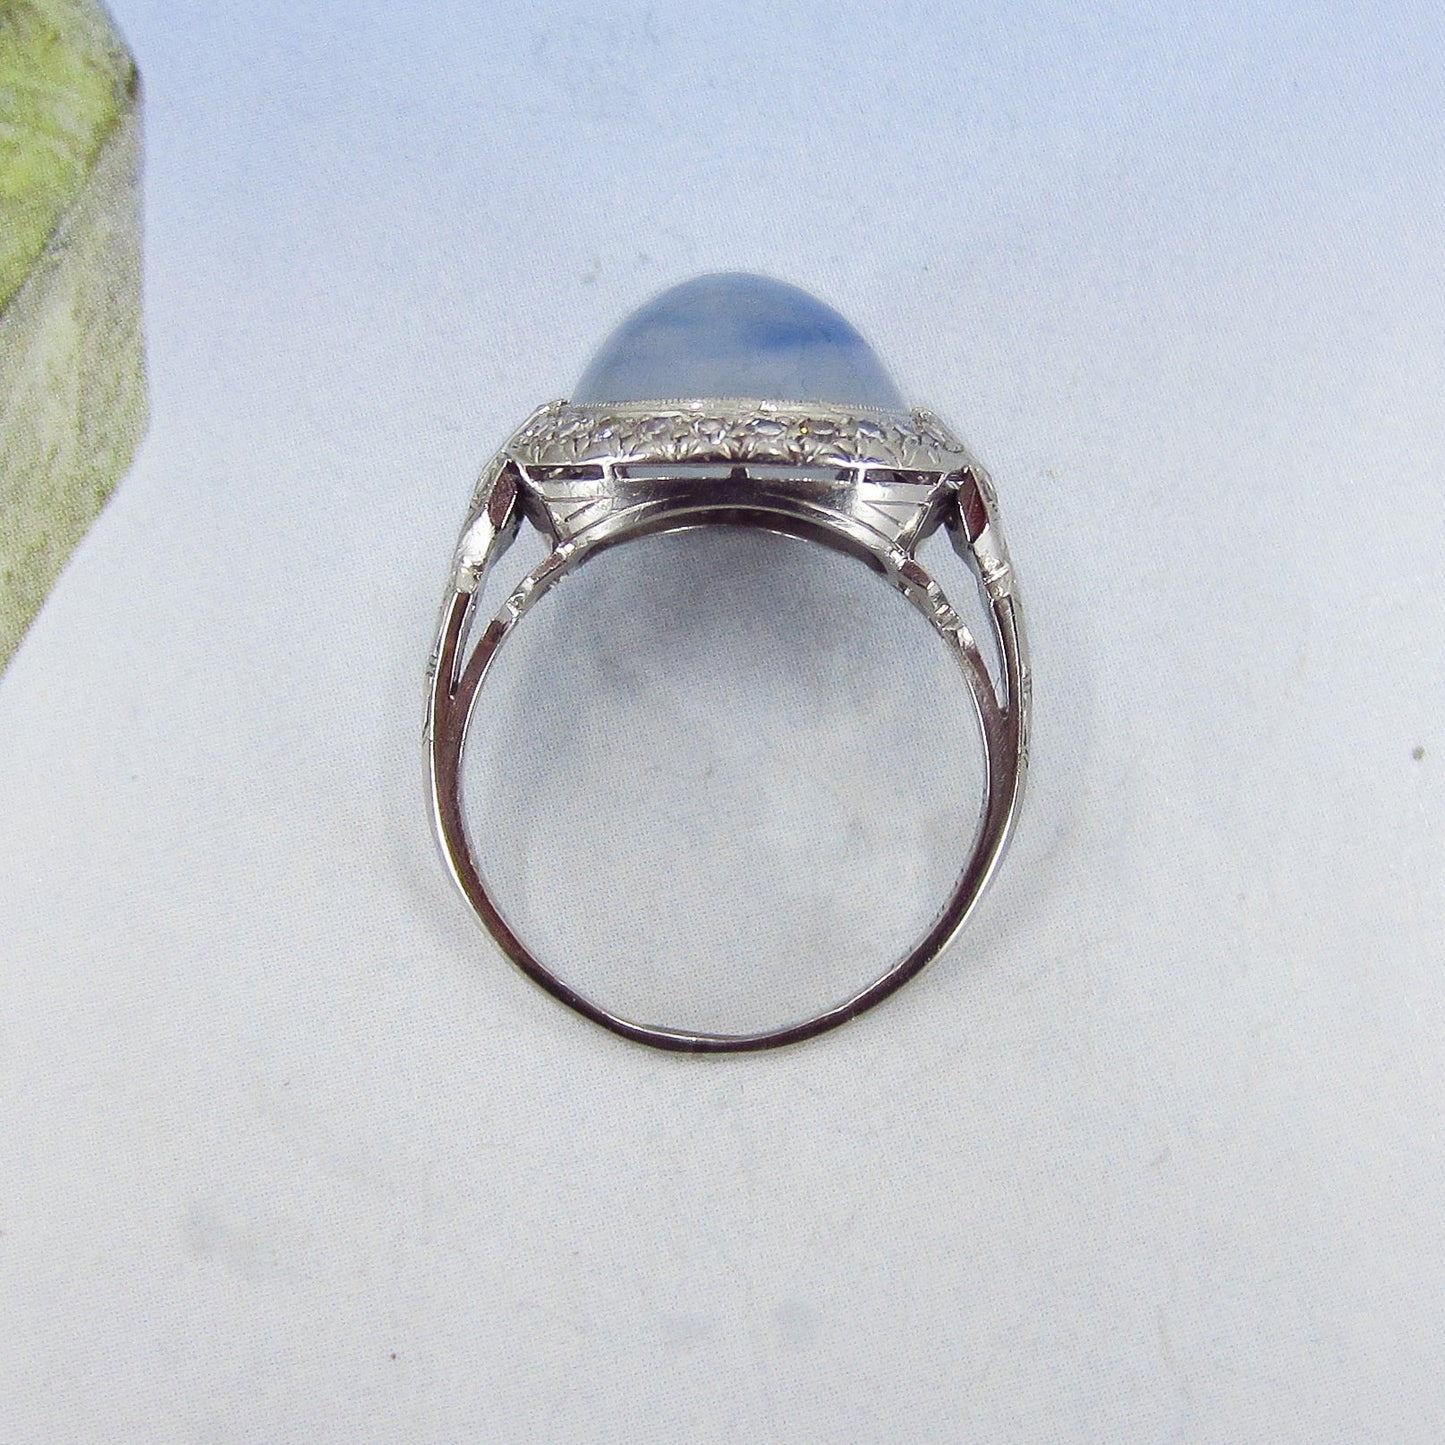 SOLD-Art Deco Star Sapphire and Diamond Ring Platinum c. 1930